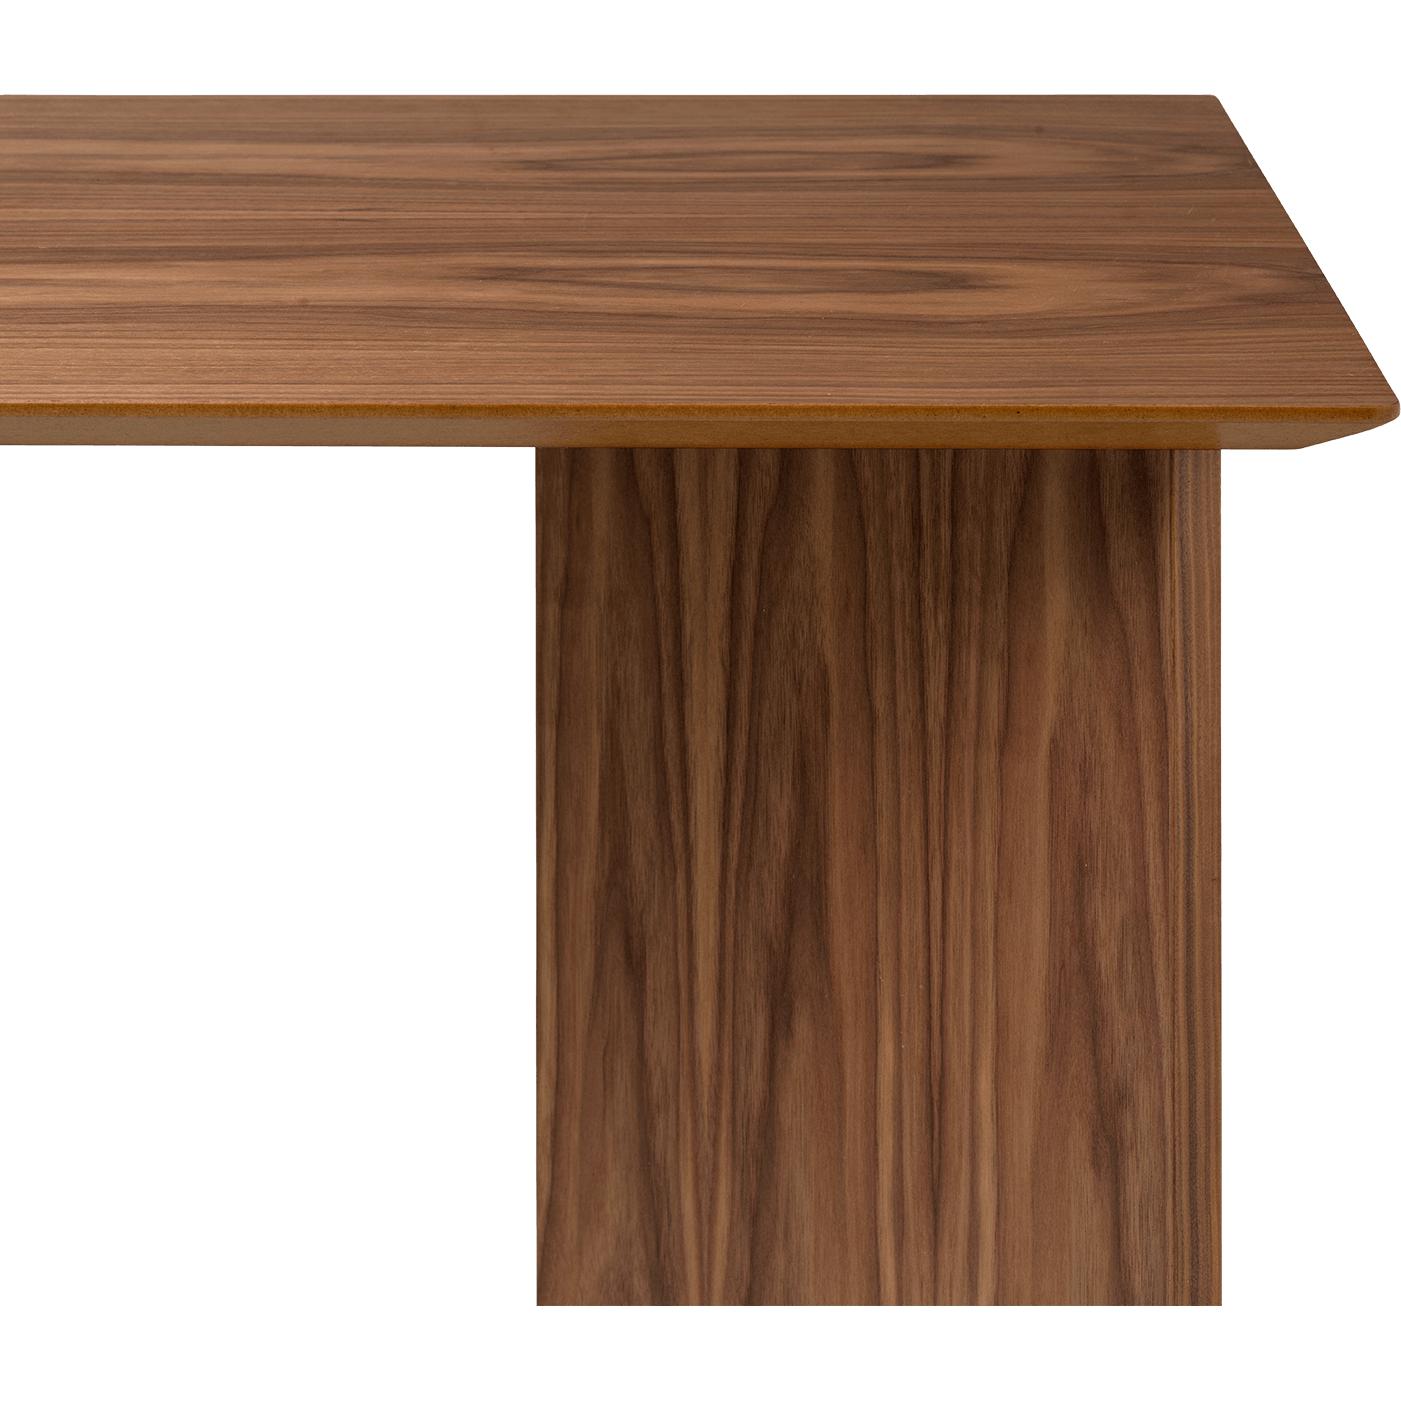 Ferm Living Mingle Table Top Nalnut, 210 cm